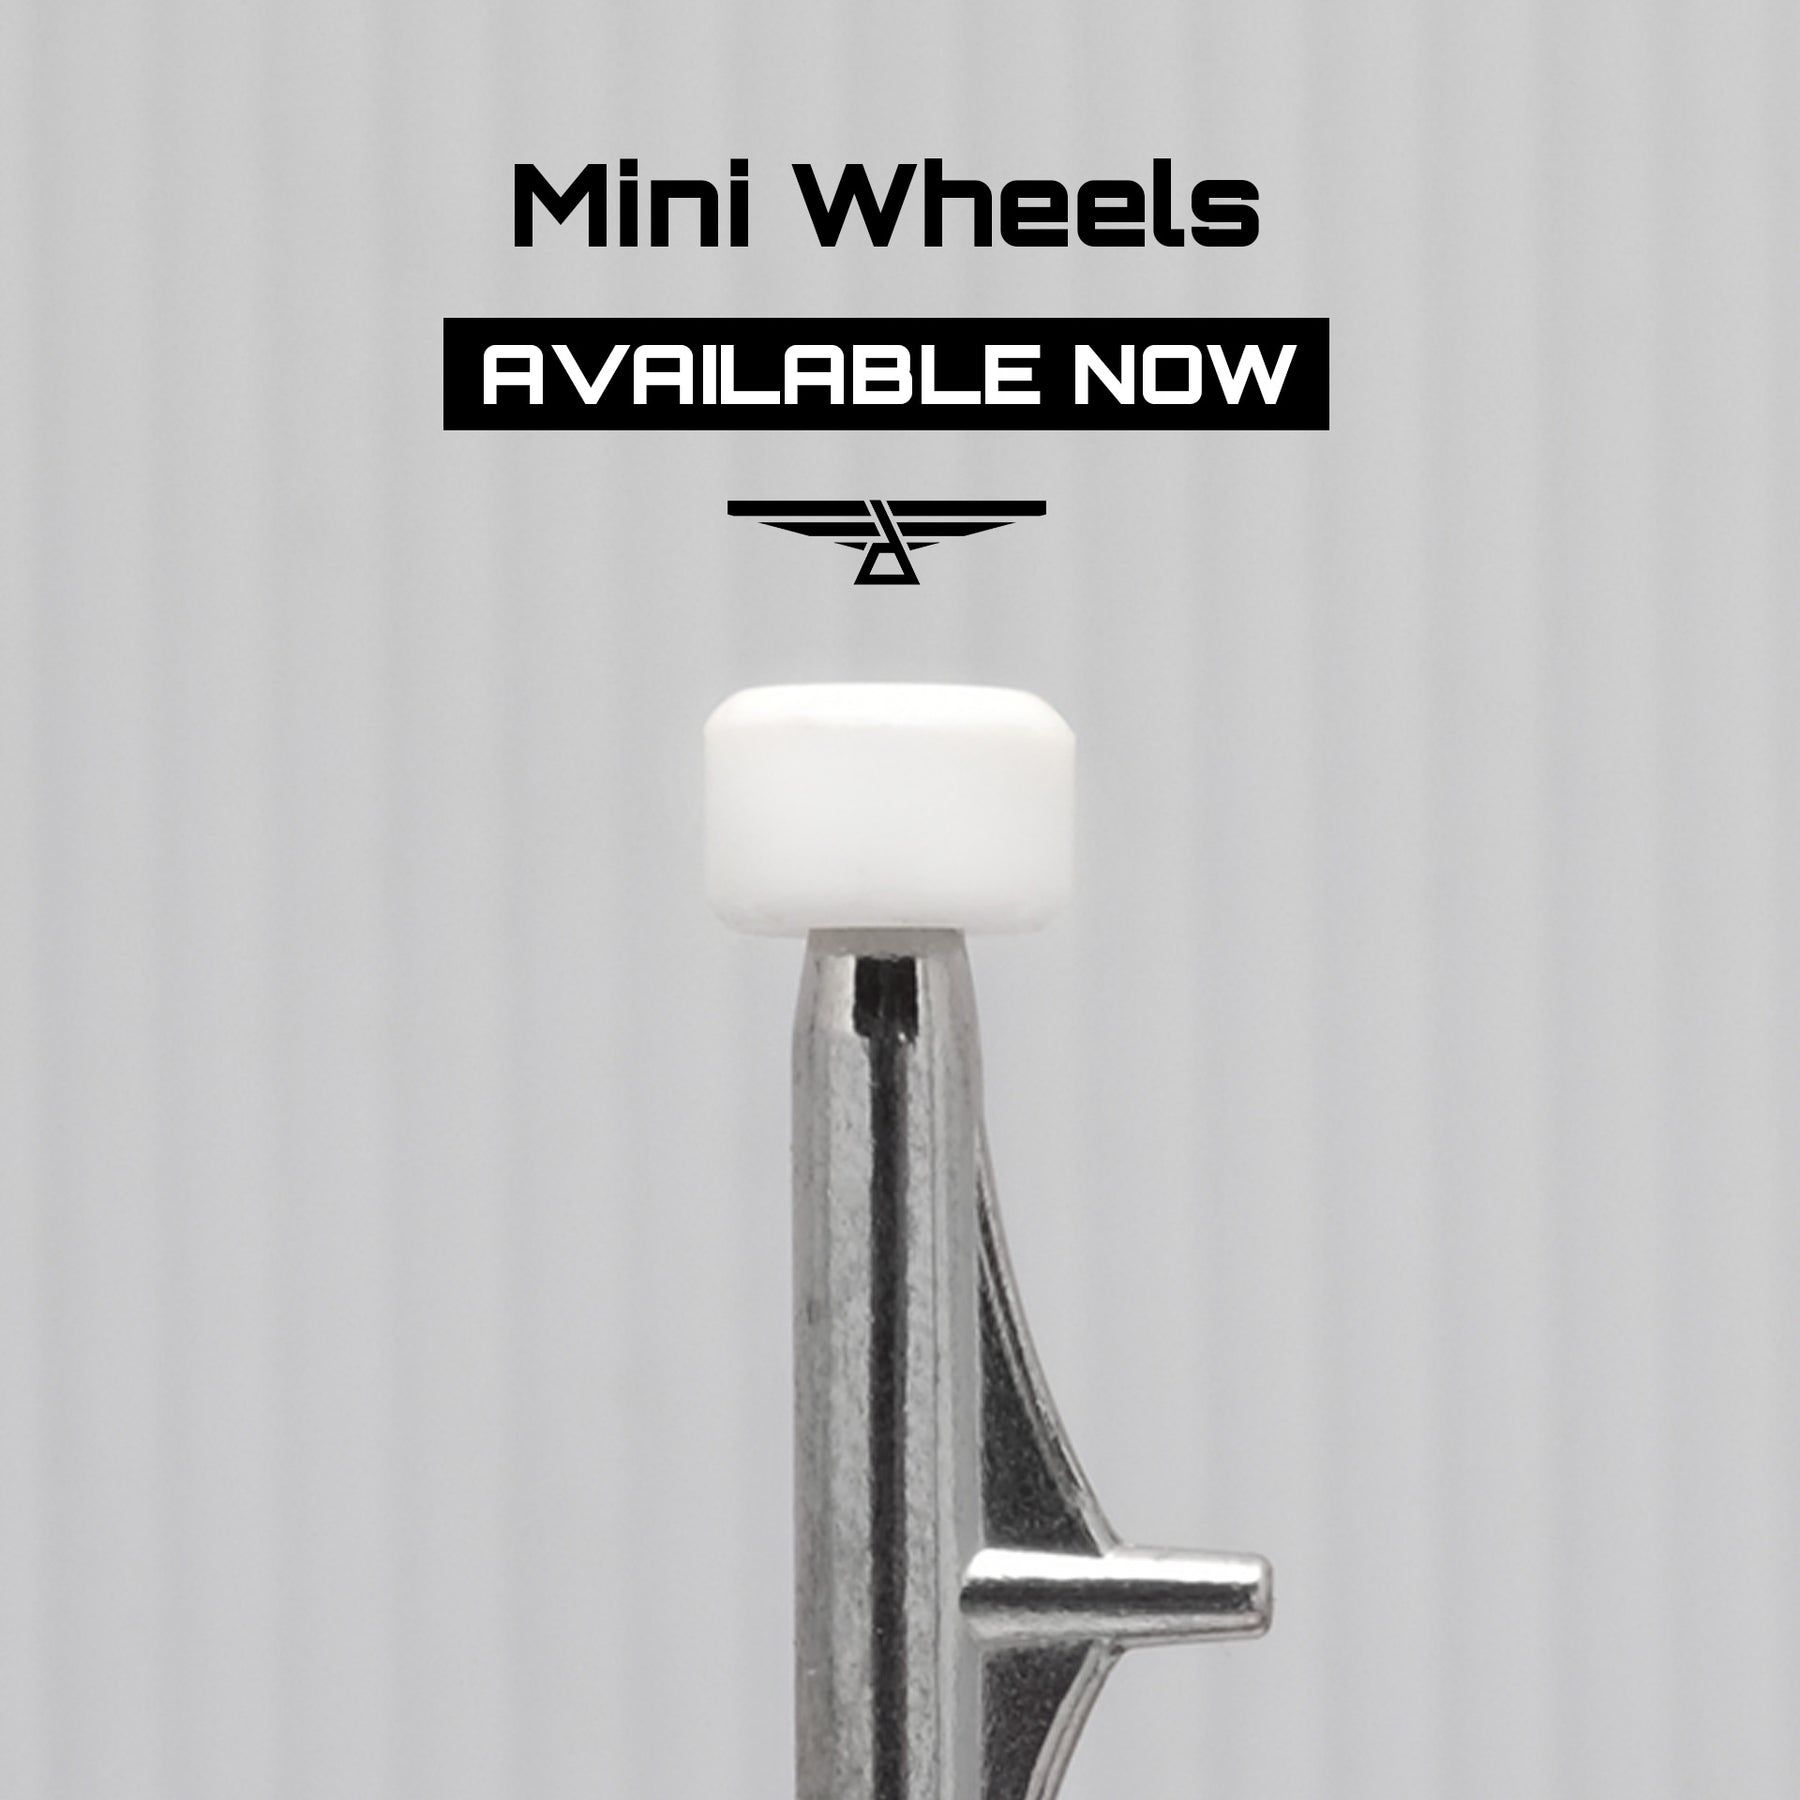 mini wheels photo launch mobile